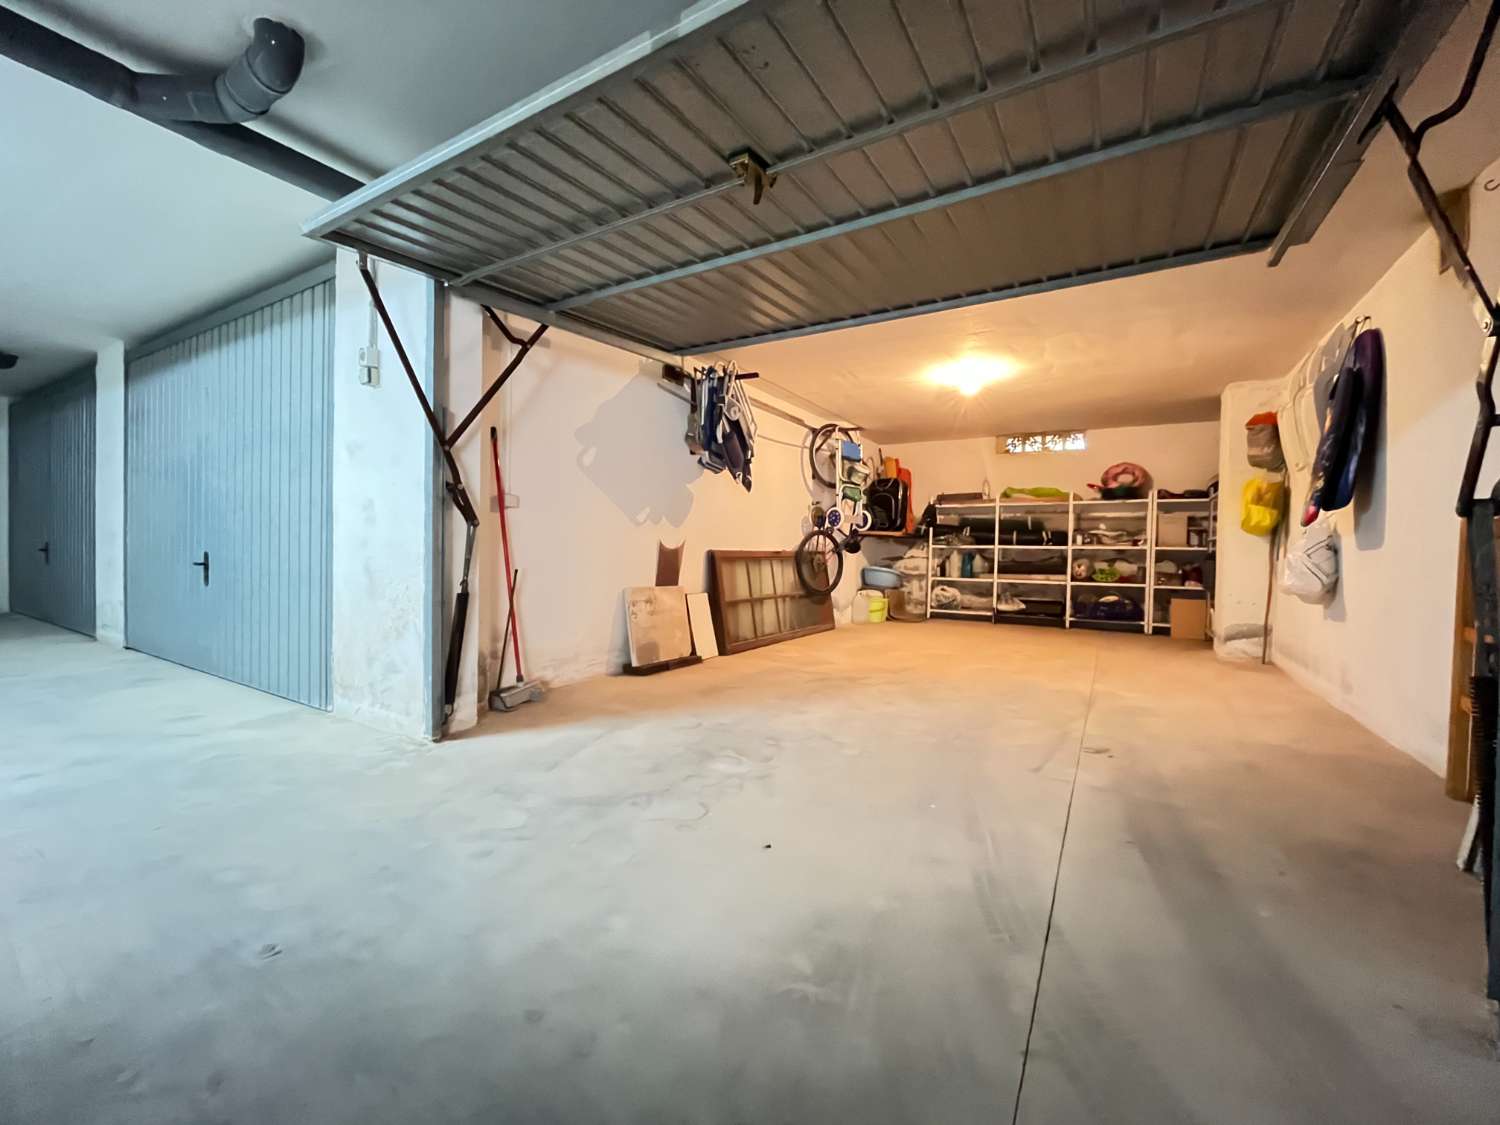 Large enclosed underground garage